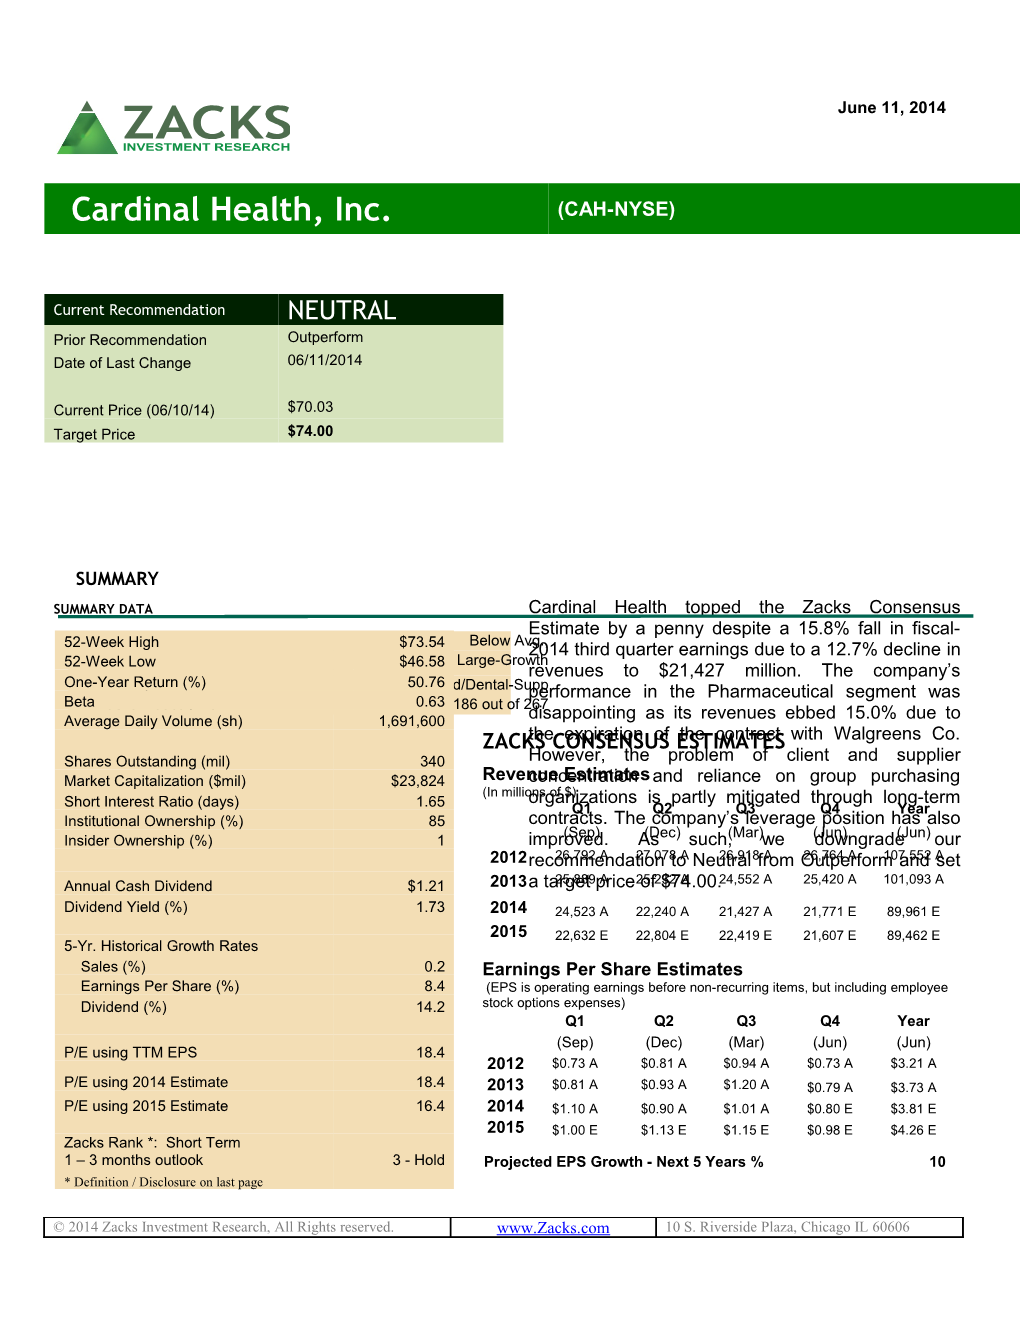 Cardinal Health, Inc